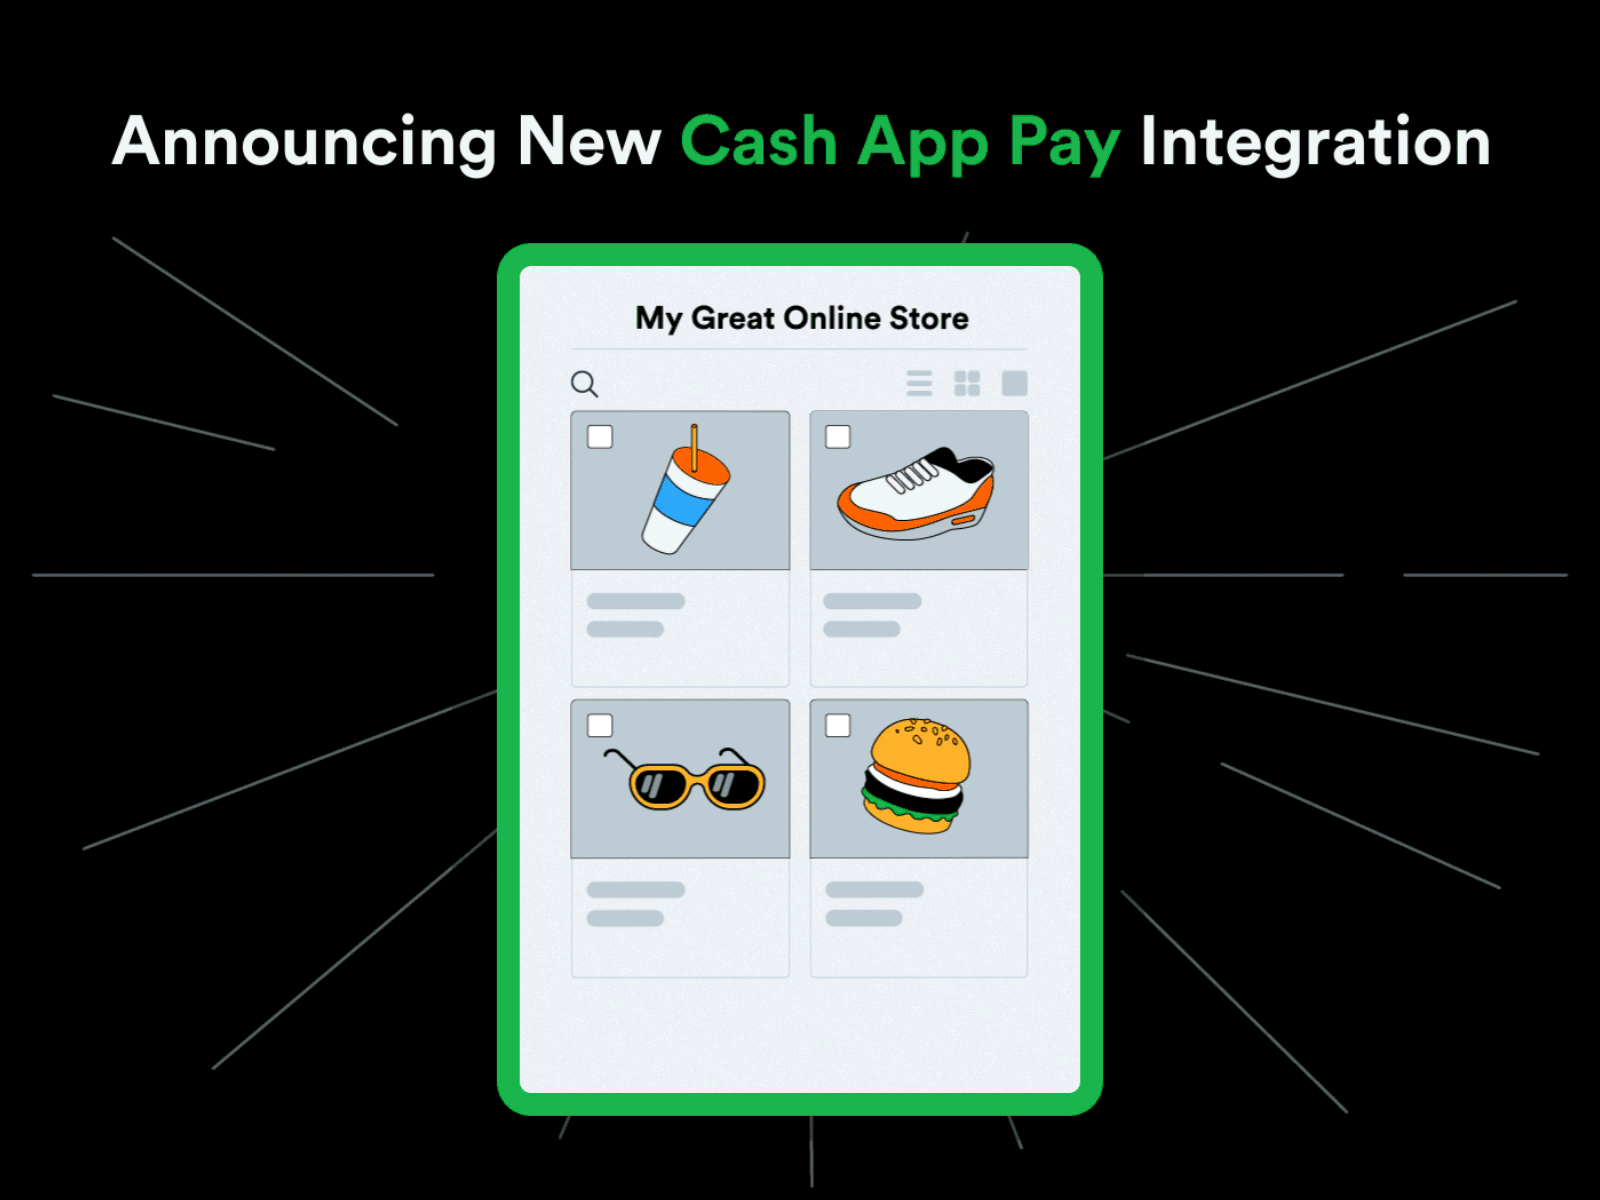 Announcing new Cash App Pay integration